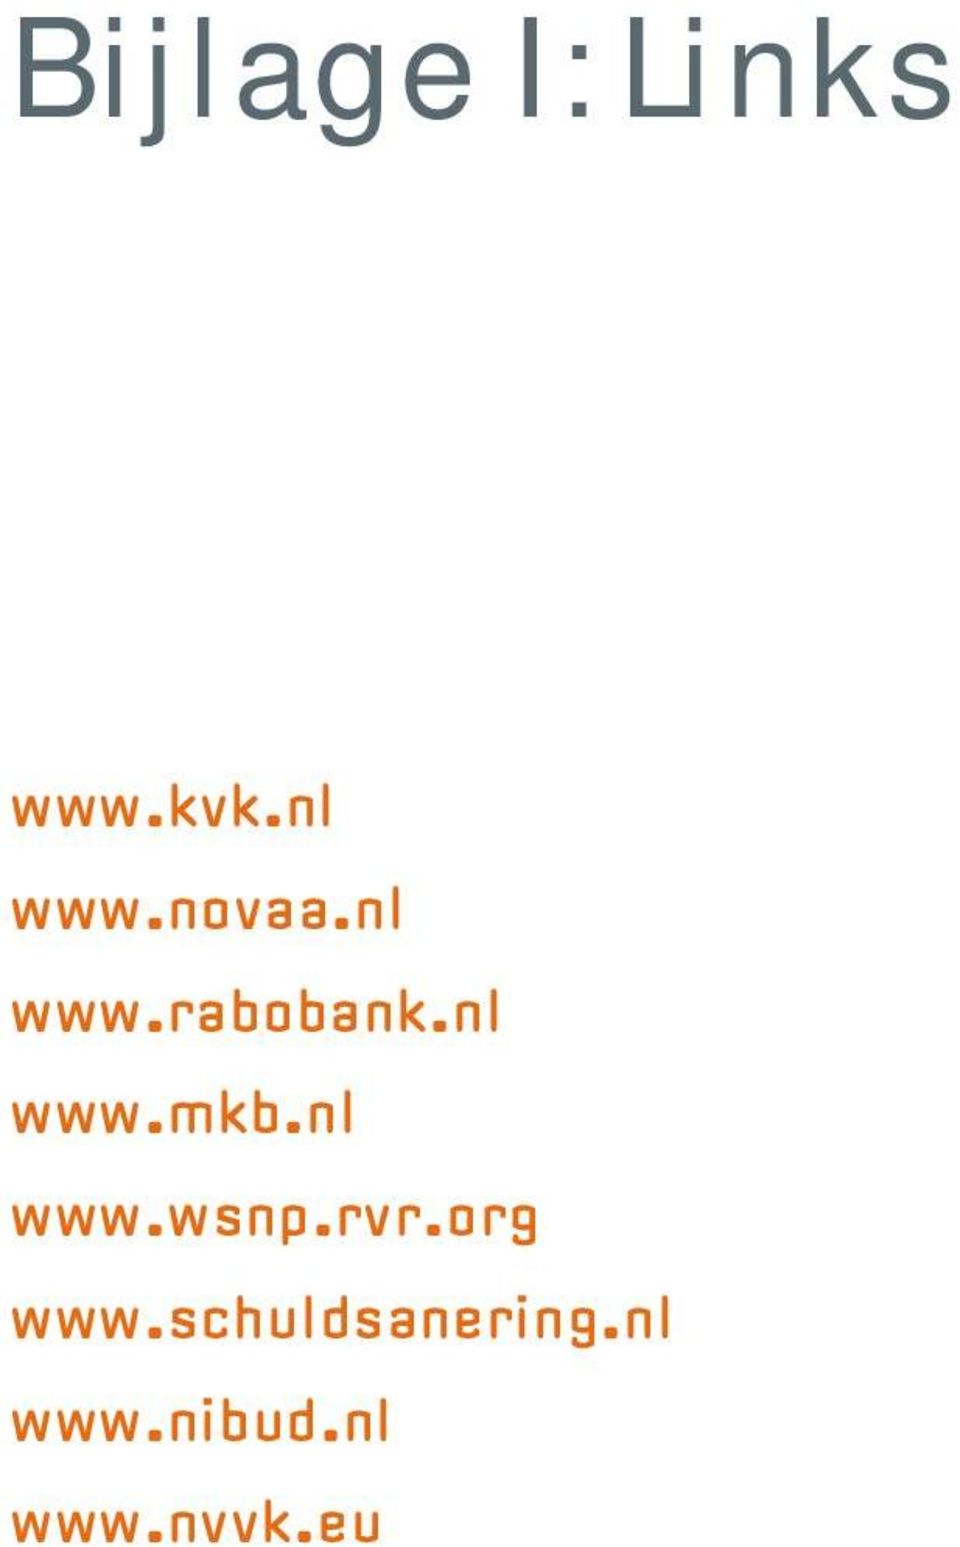 nl www.wsnp.rvr.org www.